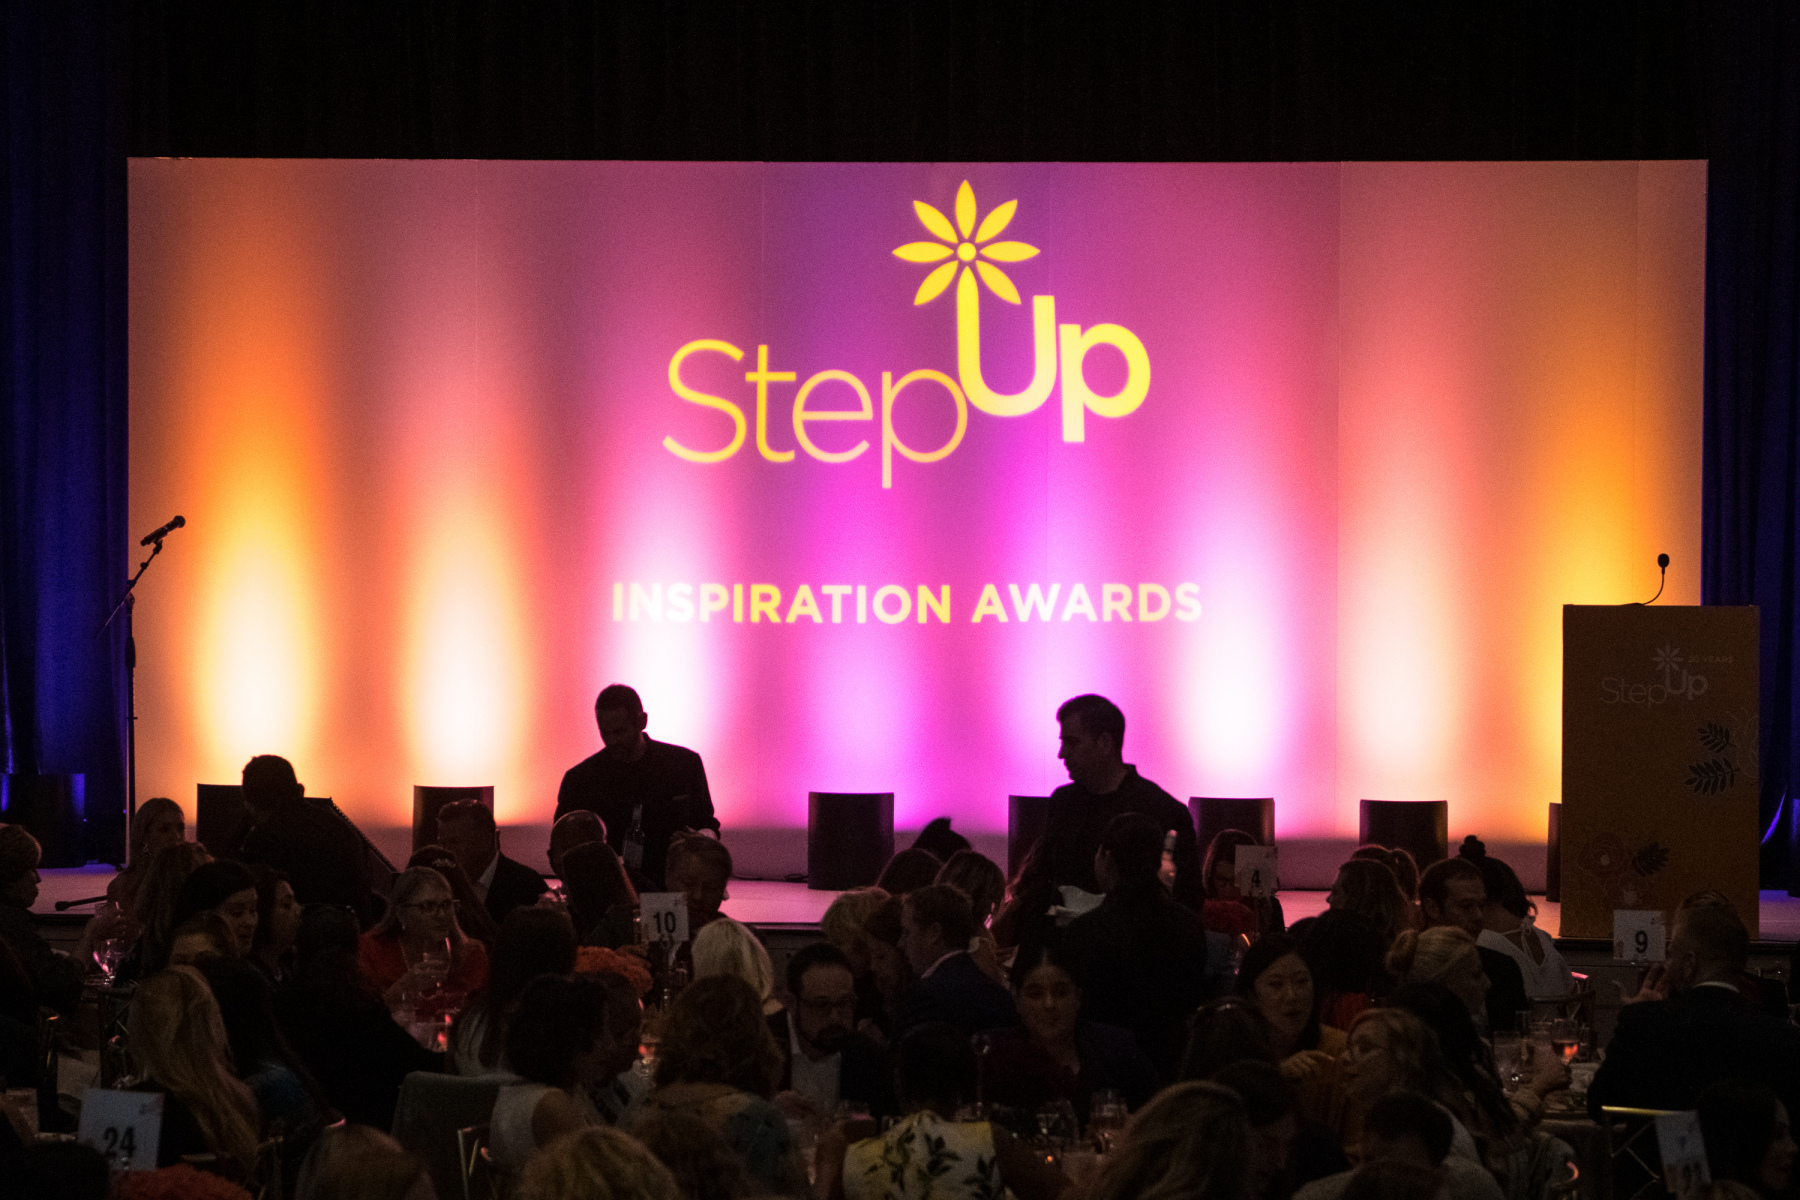 Dreamweaver Brand Communications | Step Up Inspiration Awards | Event Marketing | Footwear Brand Activation